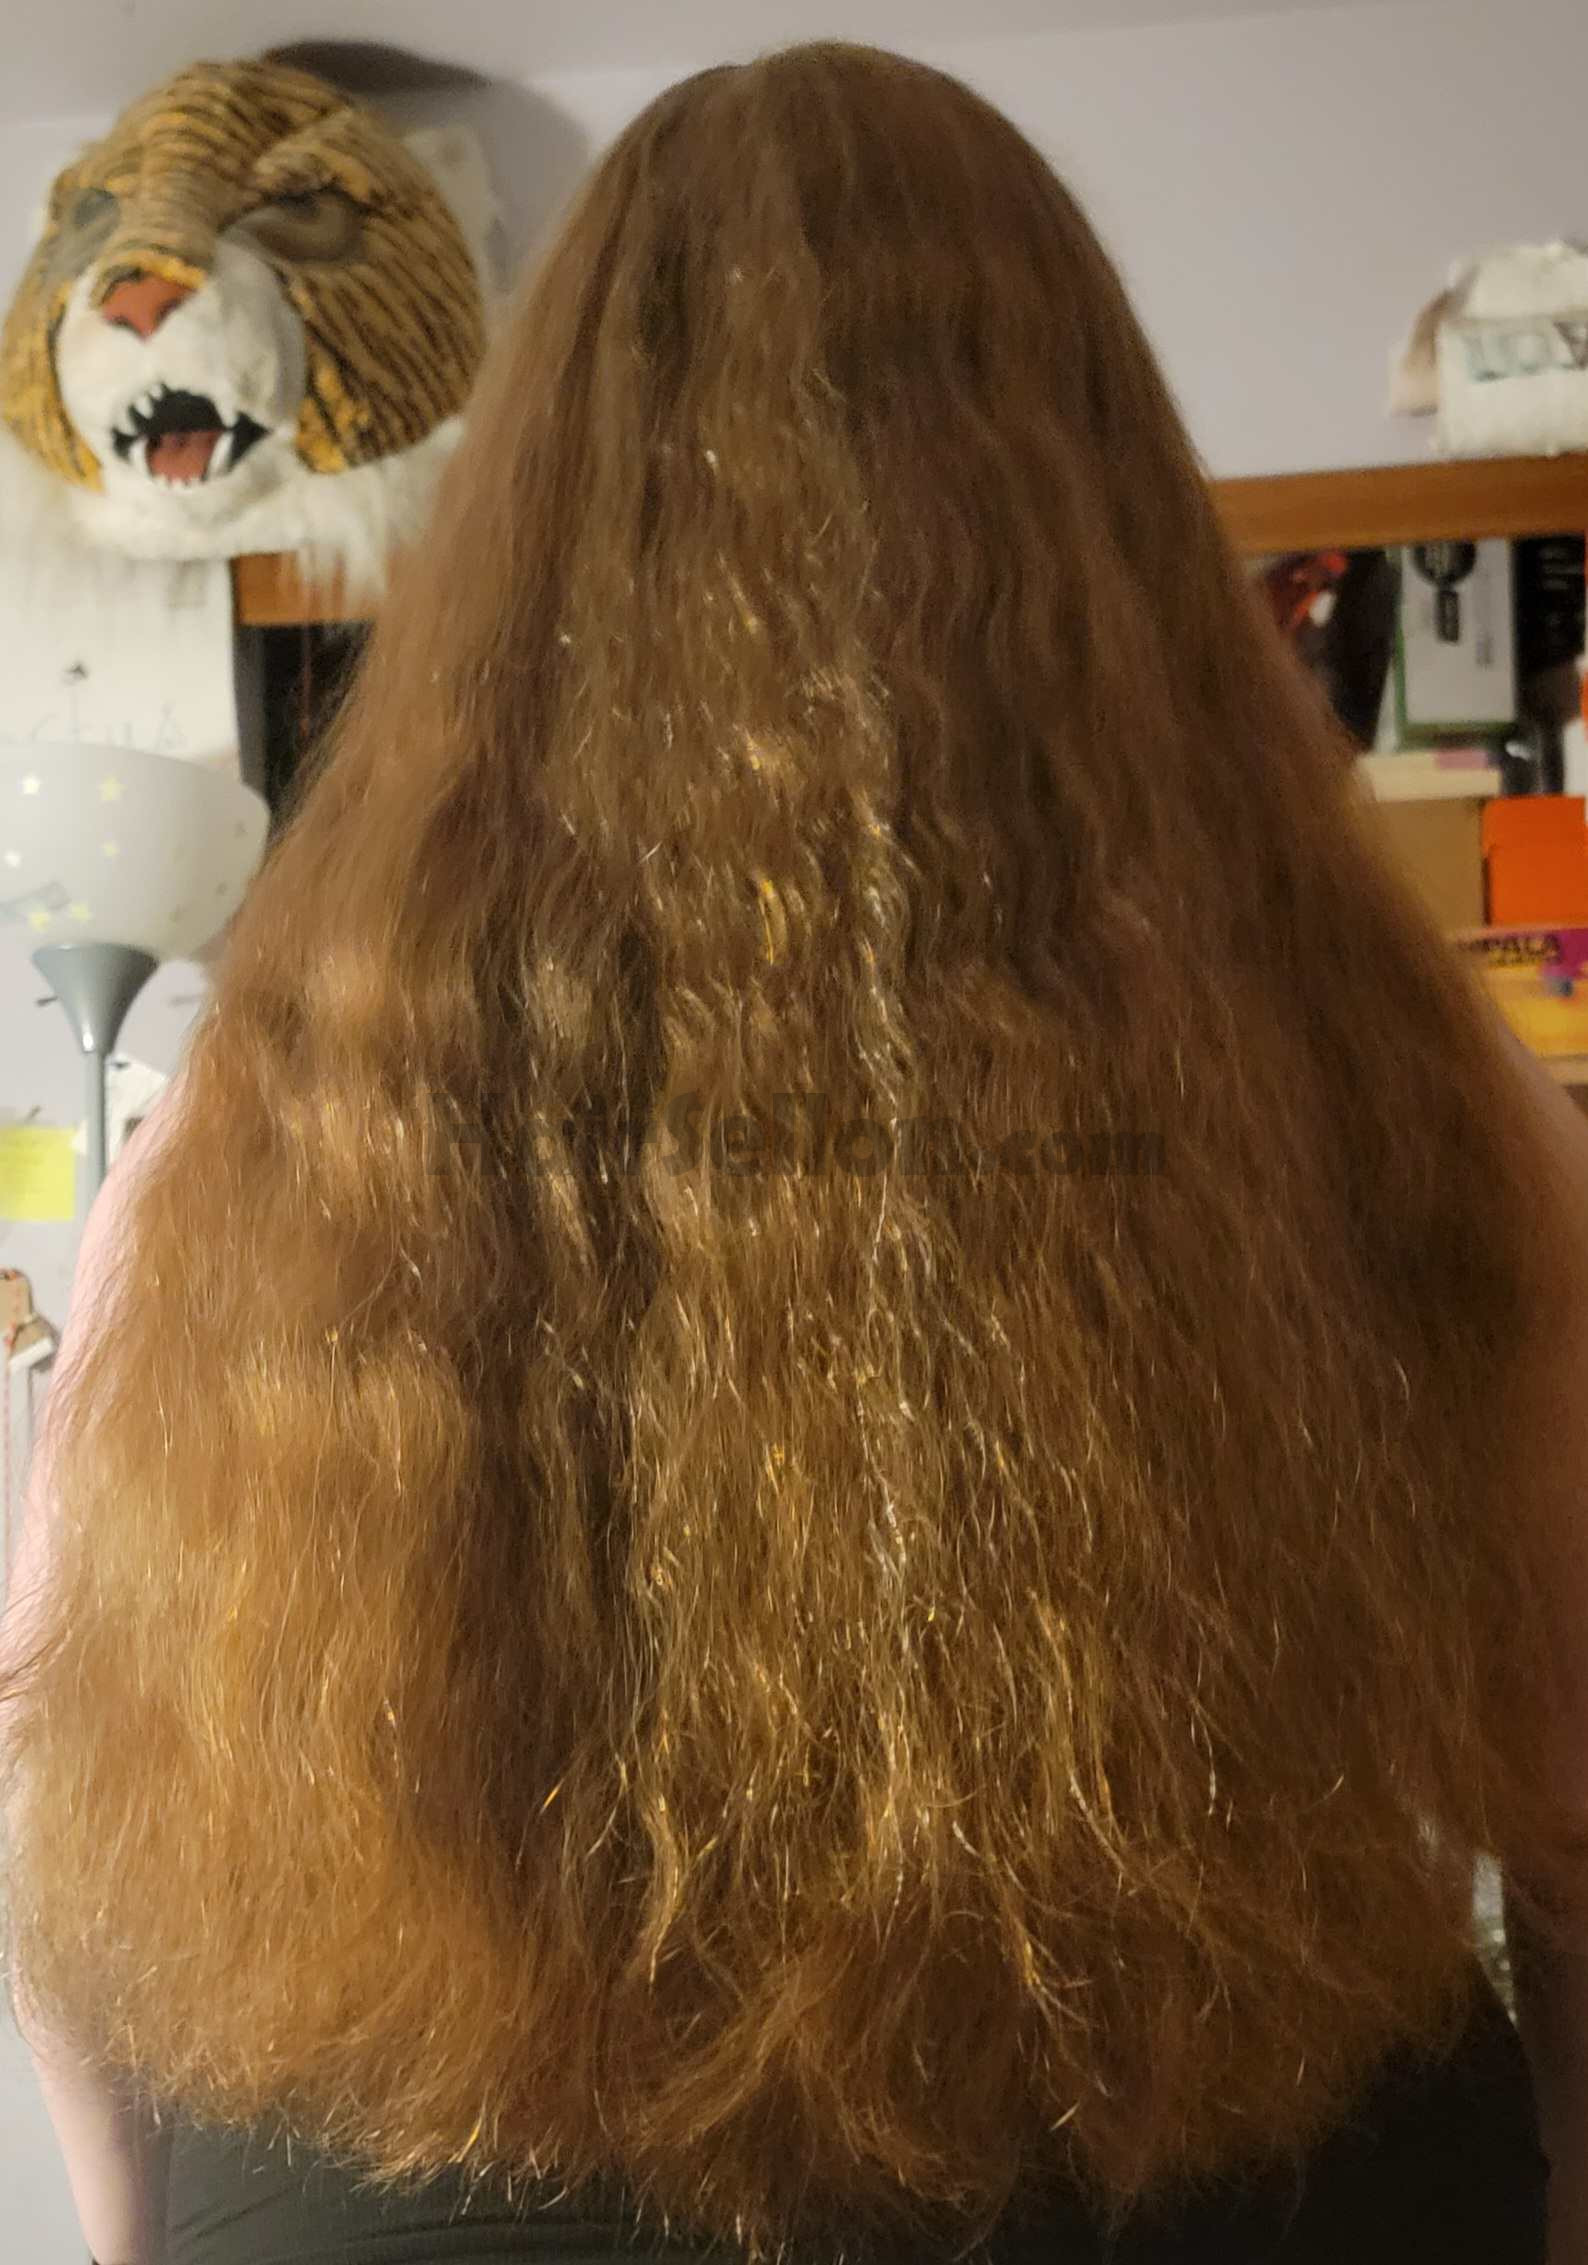 Hair